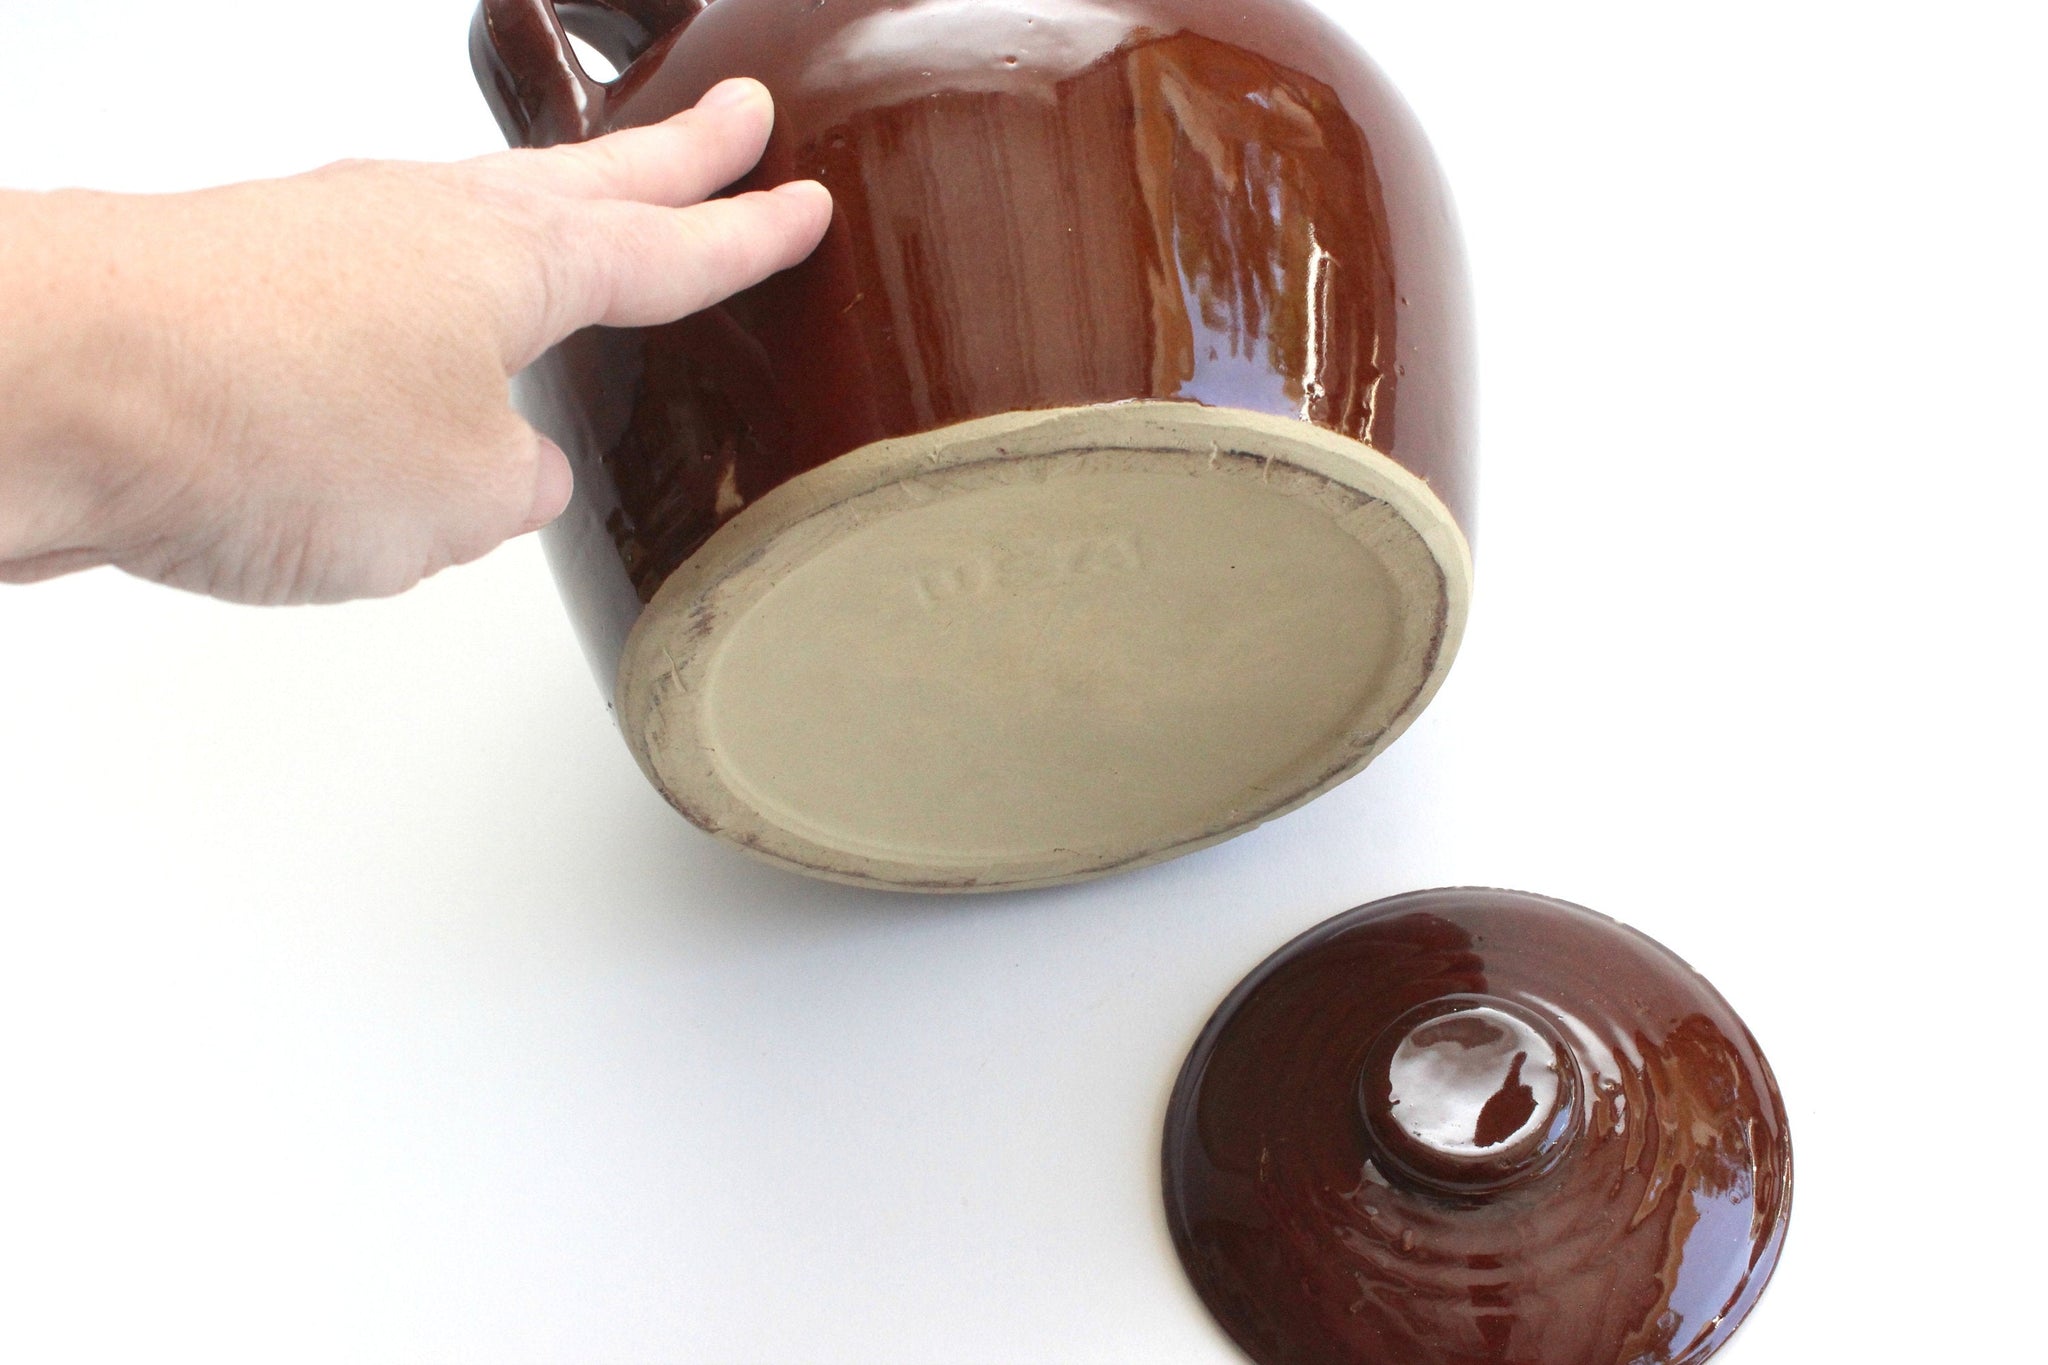 Ceramic Crock Pot Image & Photo (Free Trial)